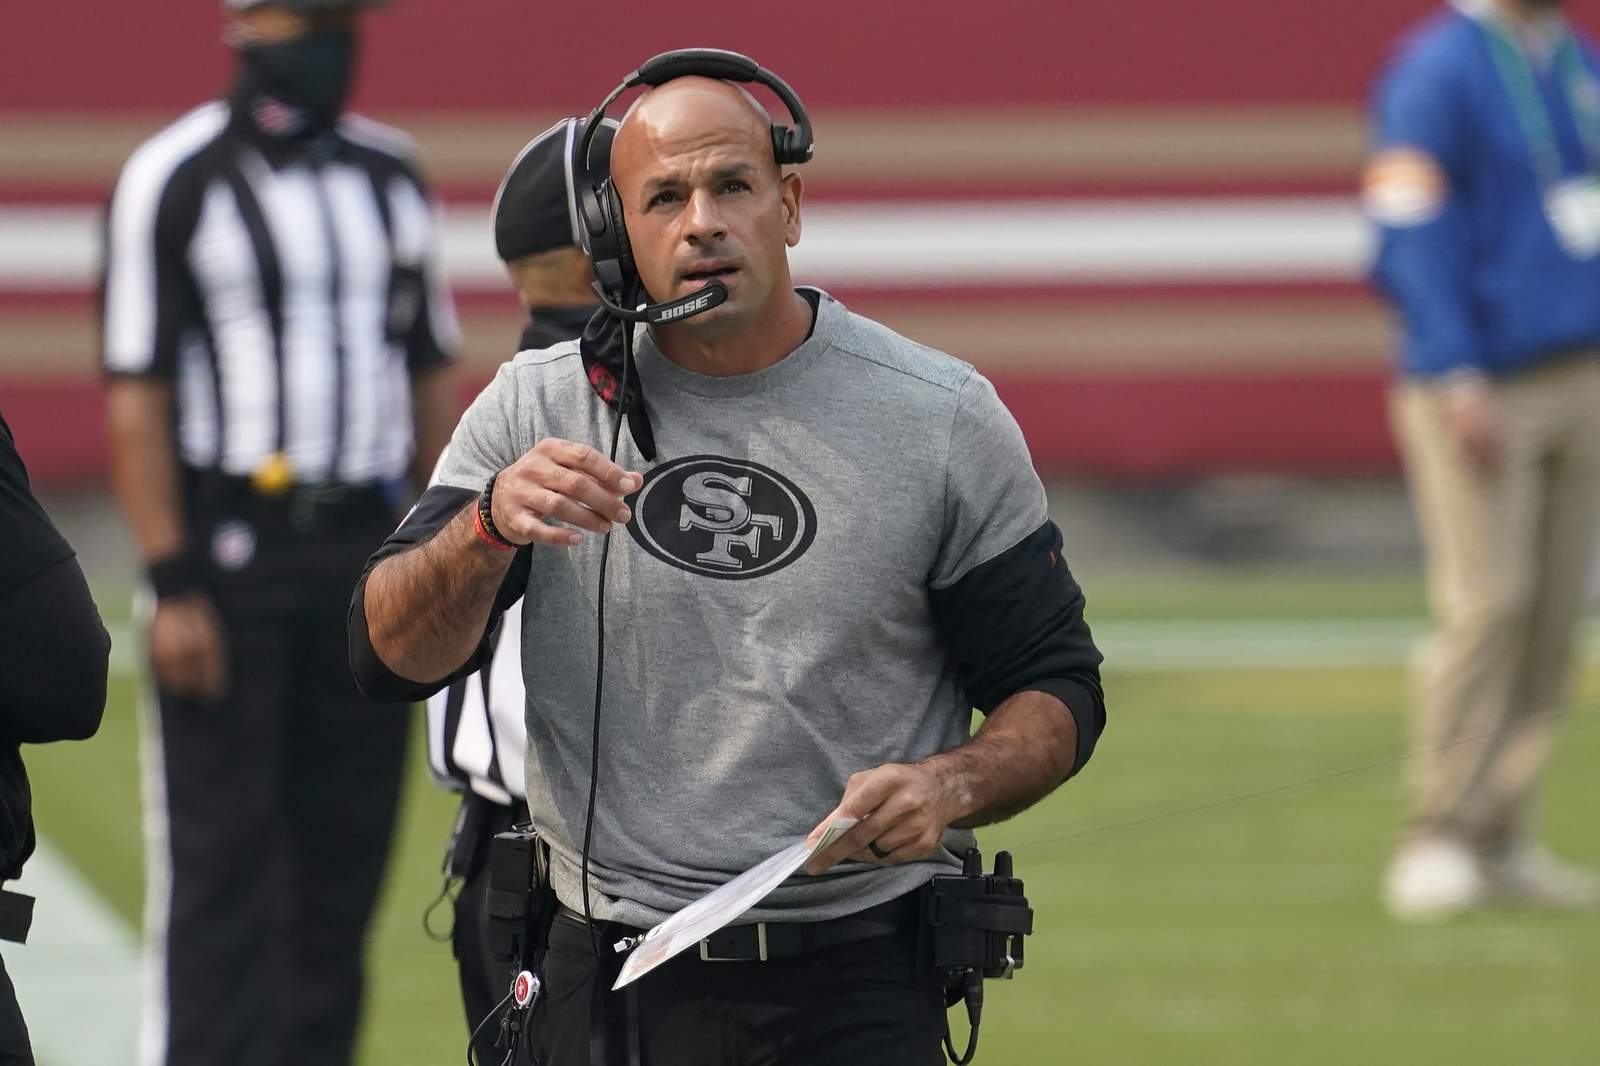 Jets hire 49ers defensive coordinator Robert Saleh as coach